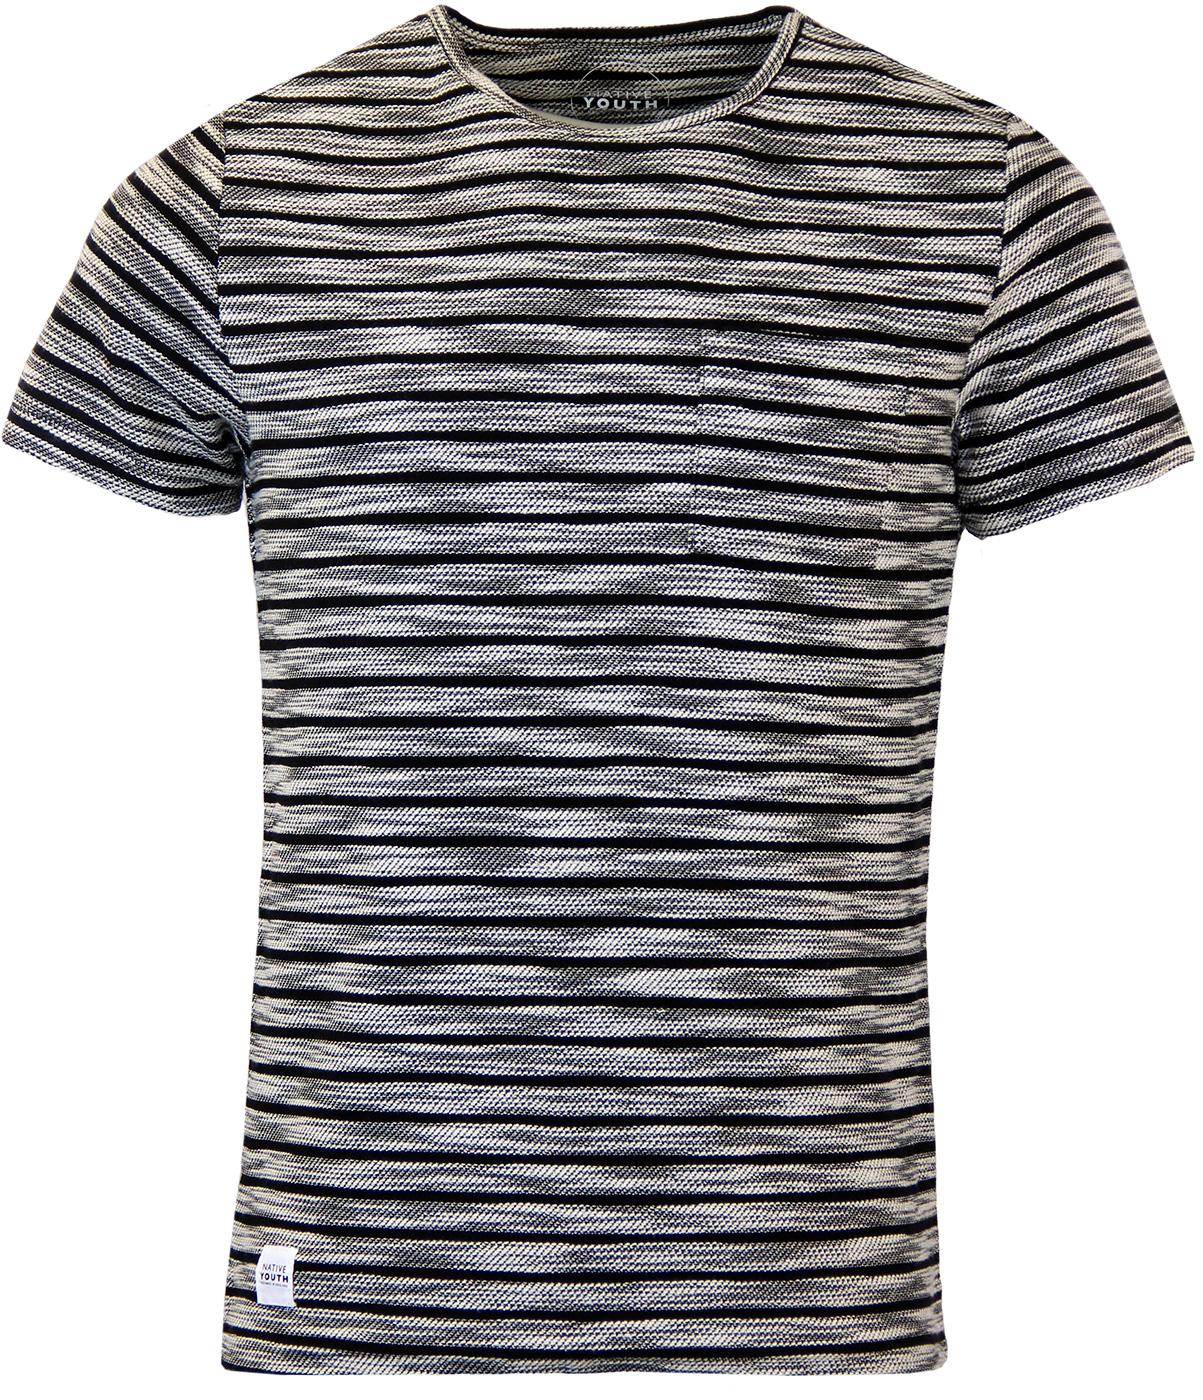 NATIVE YOUTH Retro Woven Space Dye Stripe T-Shirt in Black/White